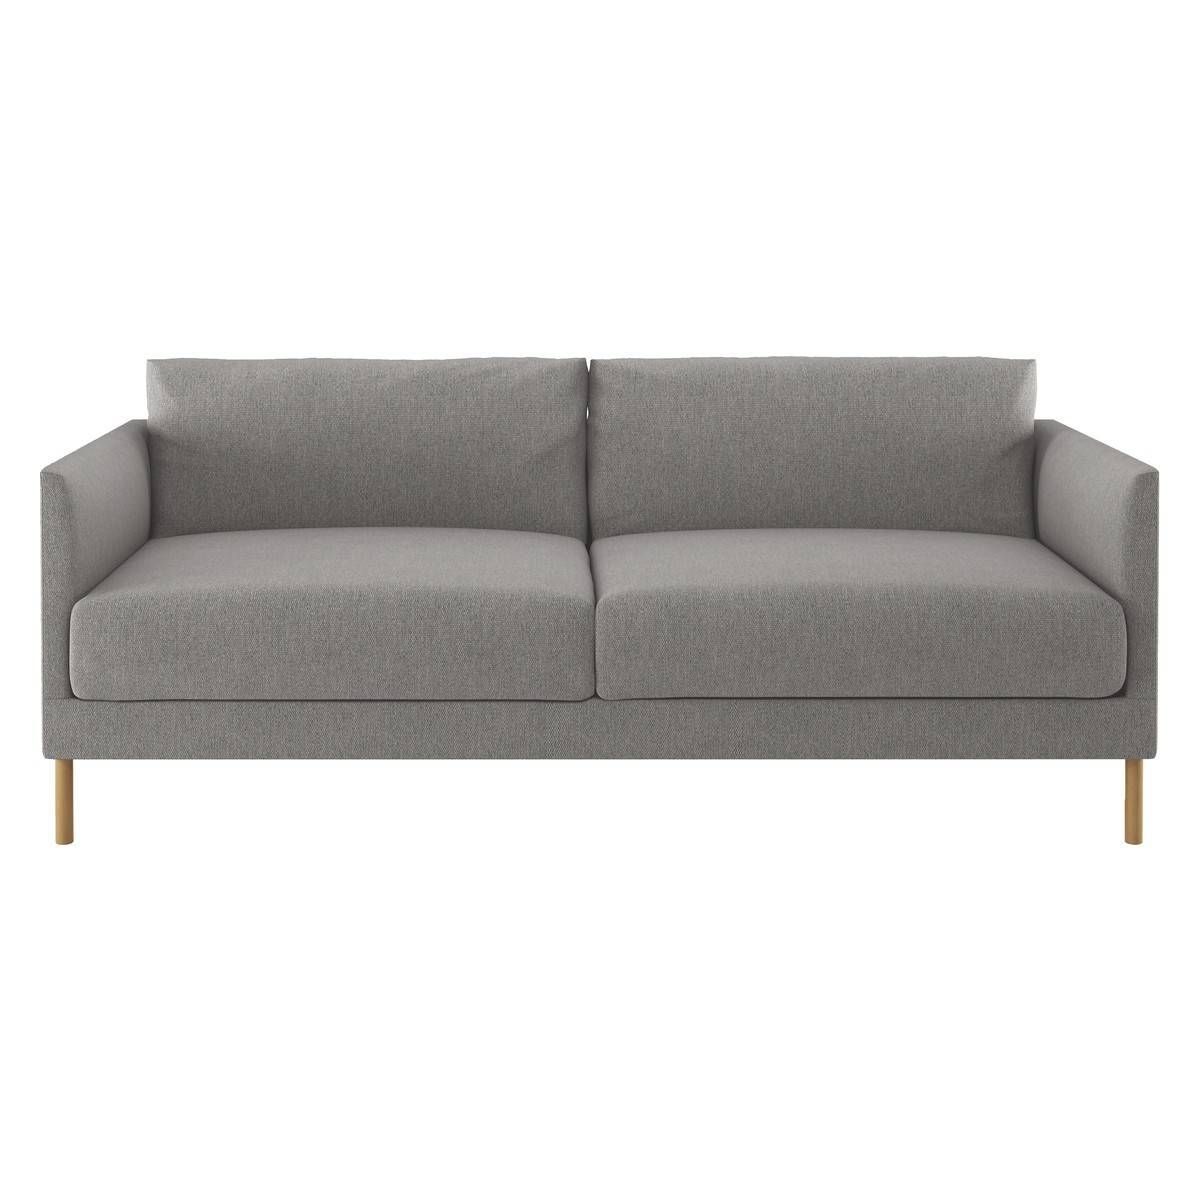 Hyde Grey Fabric 3 Seater Sofa, Wooden Legs | Buy Now At Habitat Uk Regarding Wood Legs Sofas (View 14 of 30)